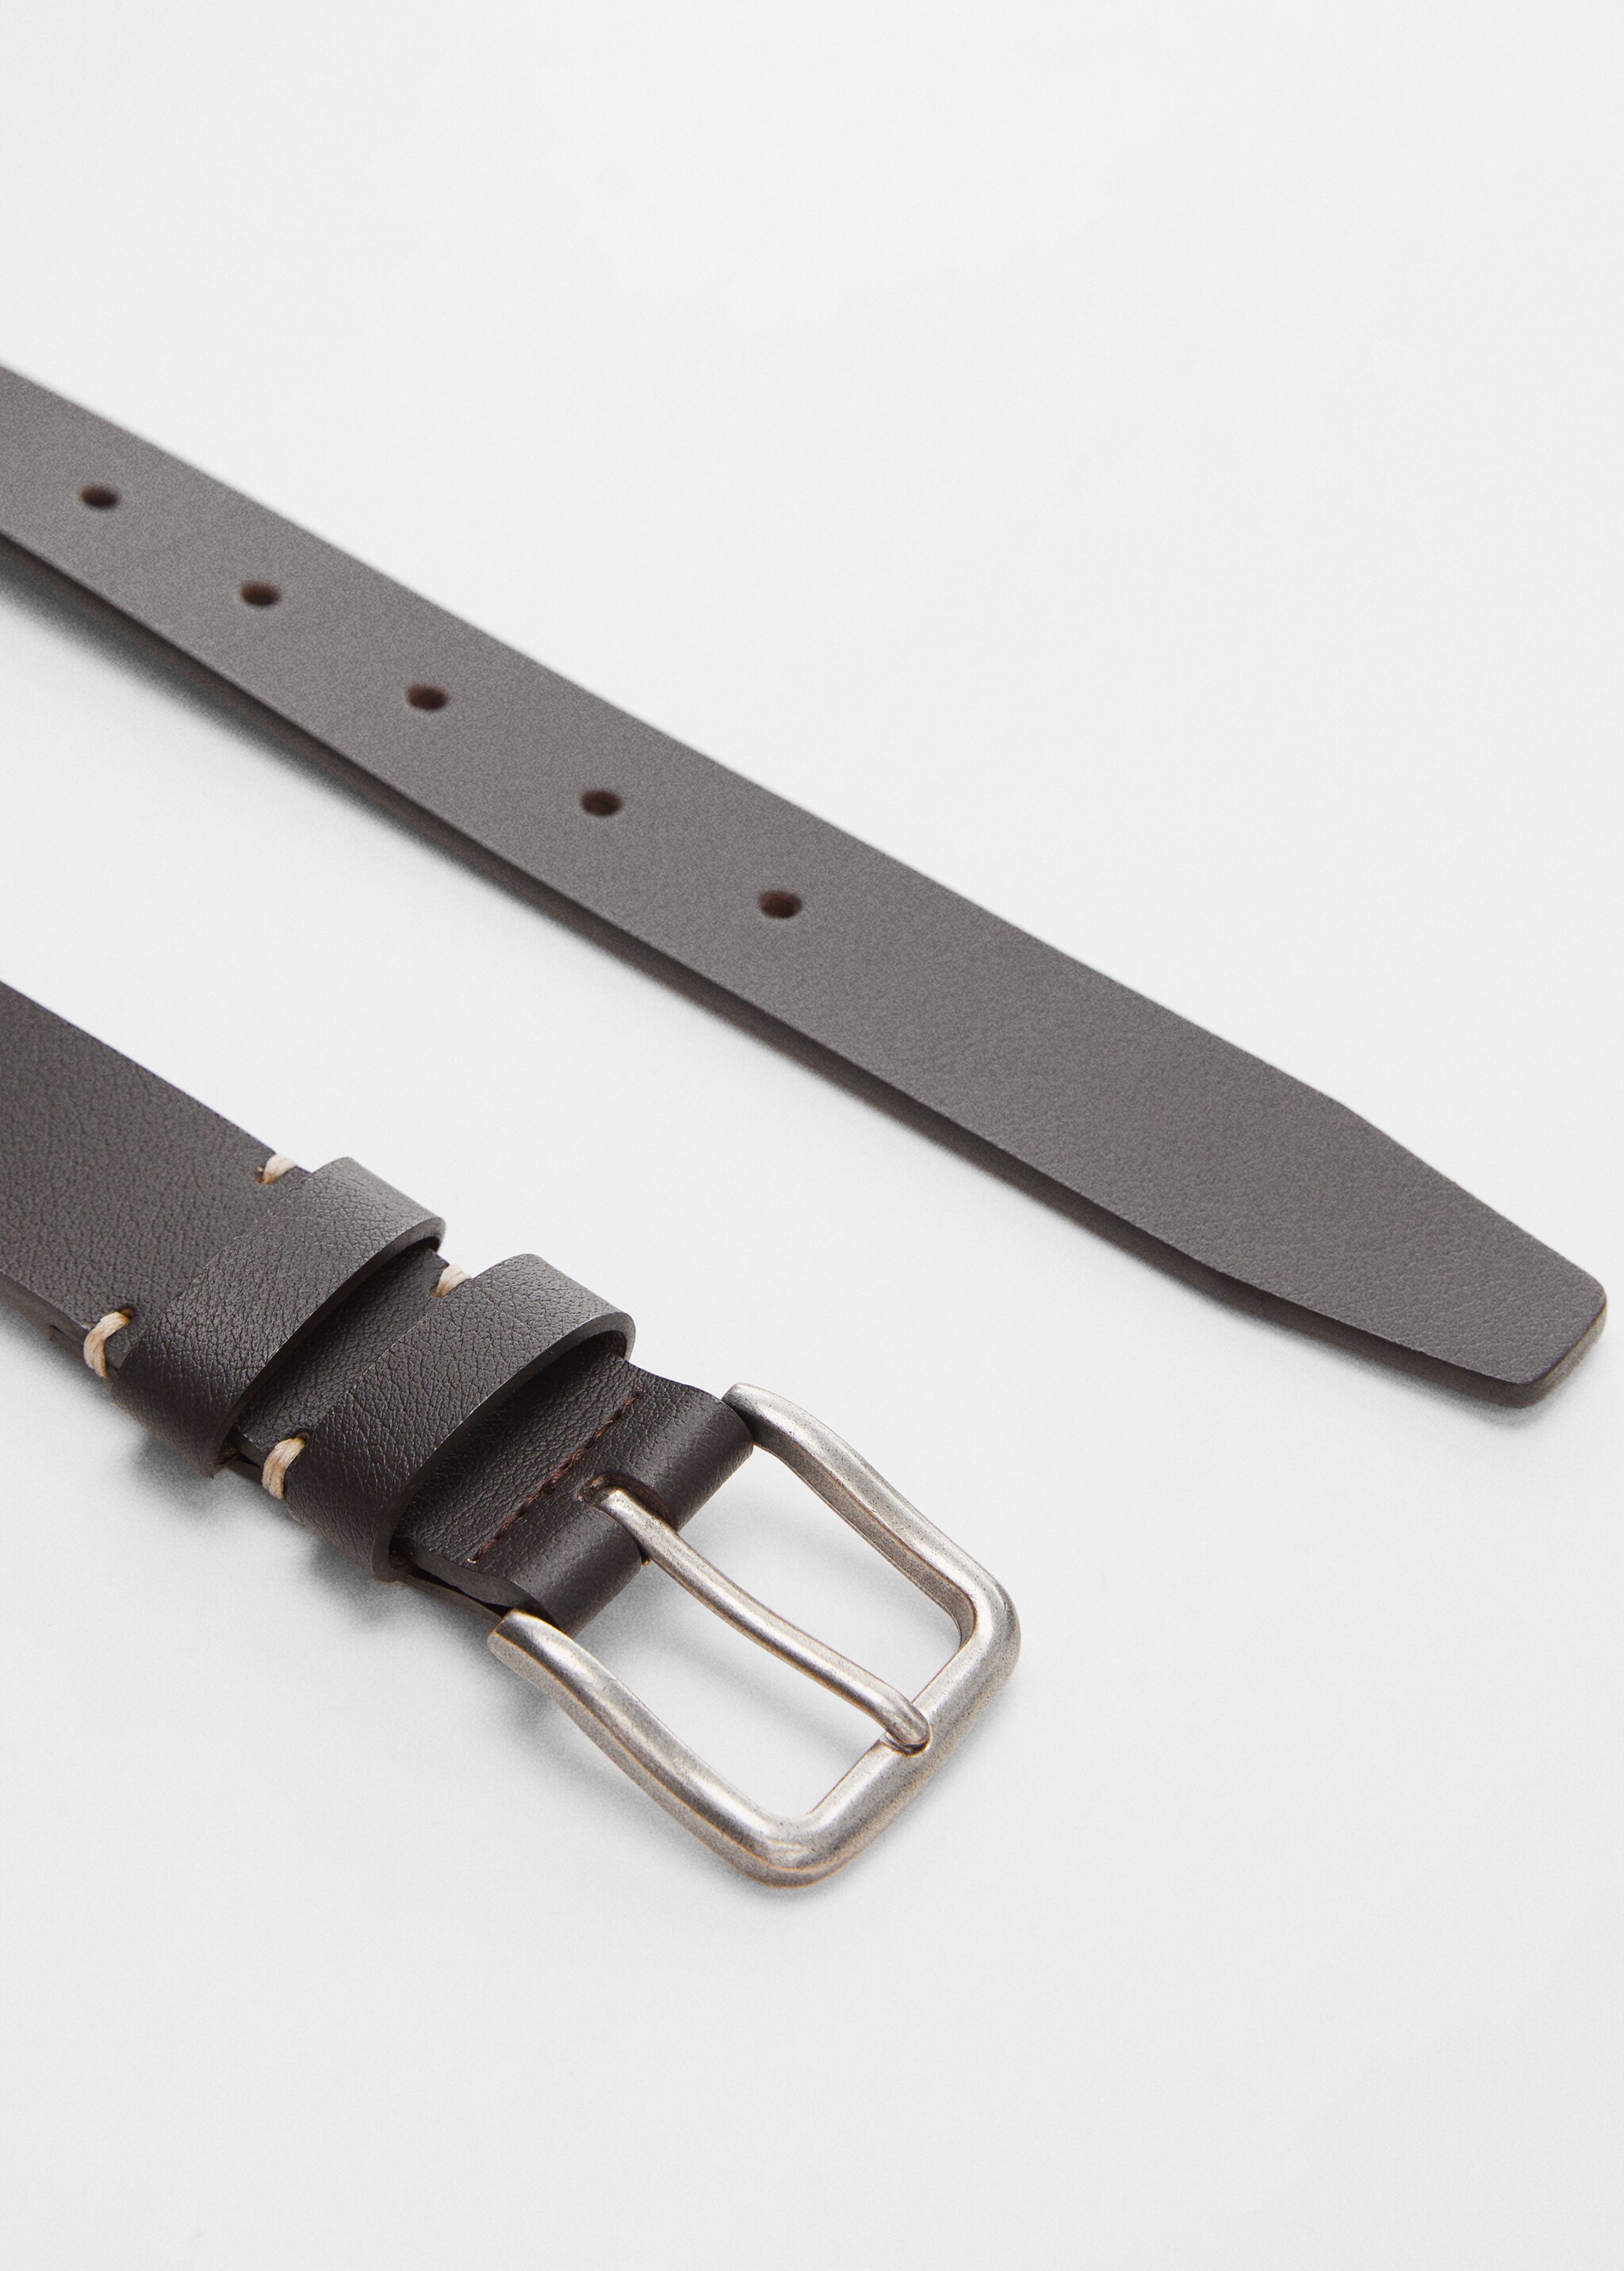 Buckle leather belt - Medium plane